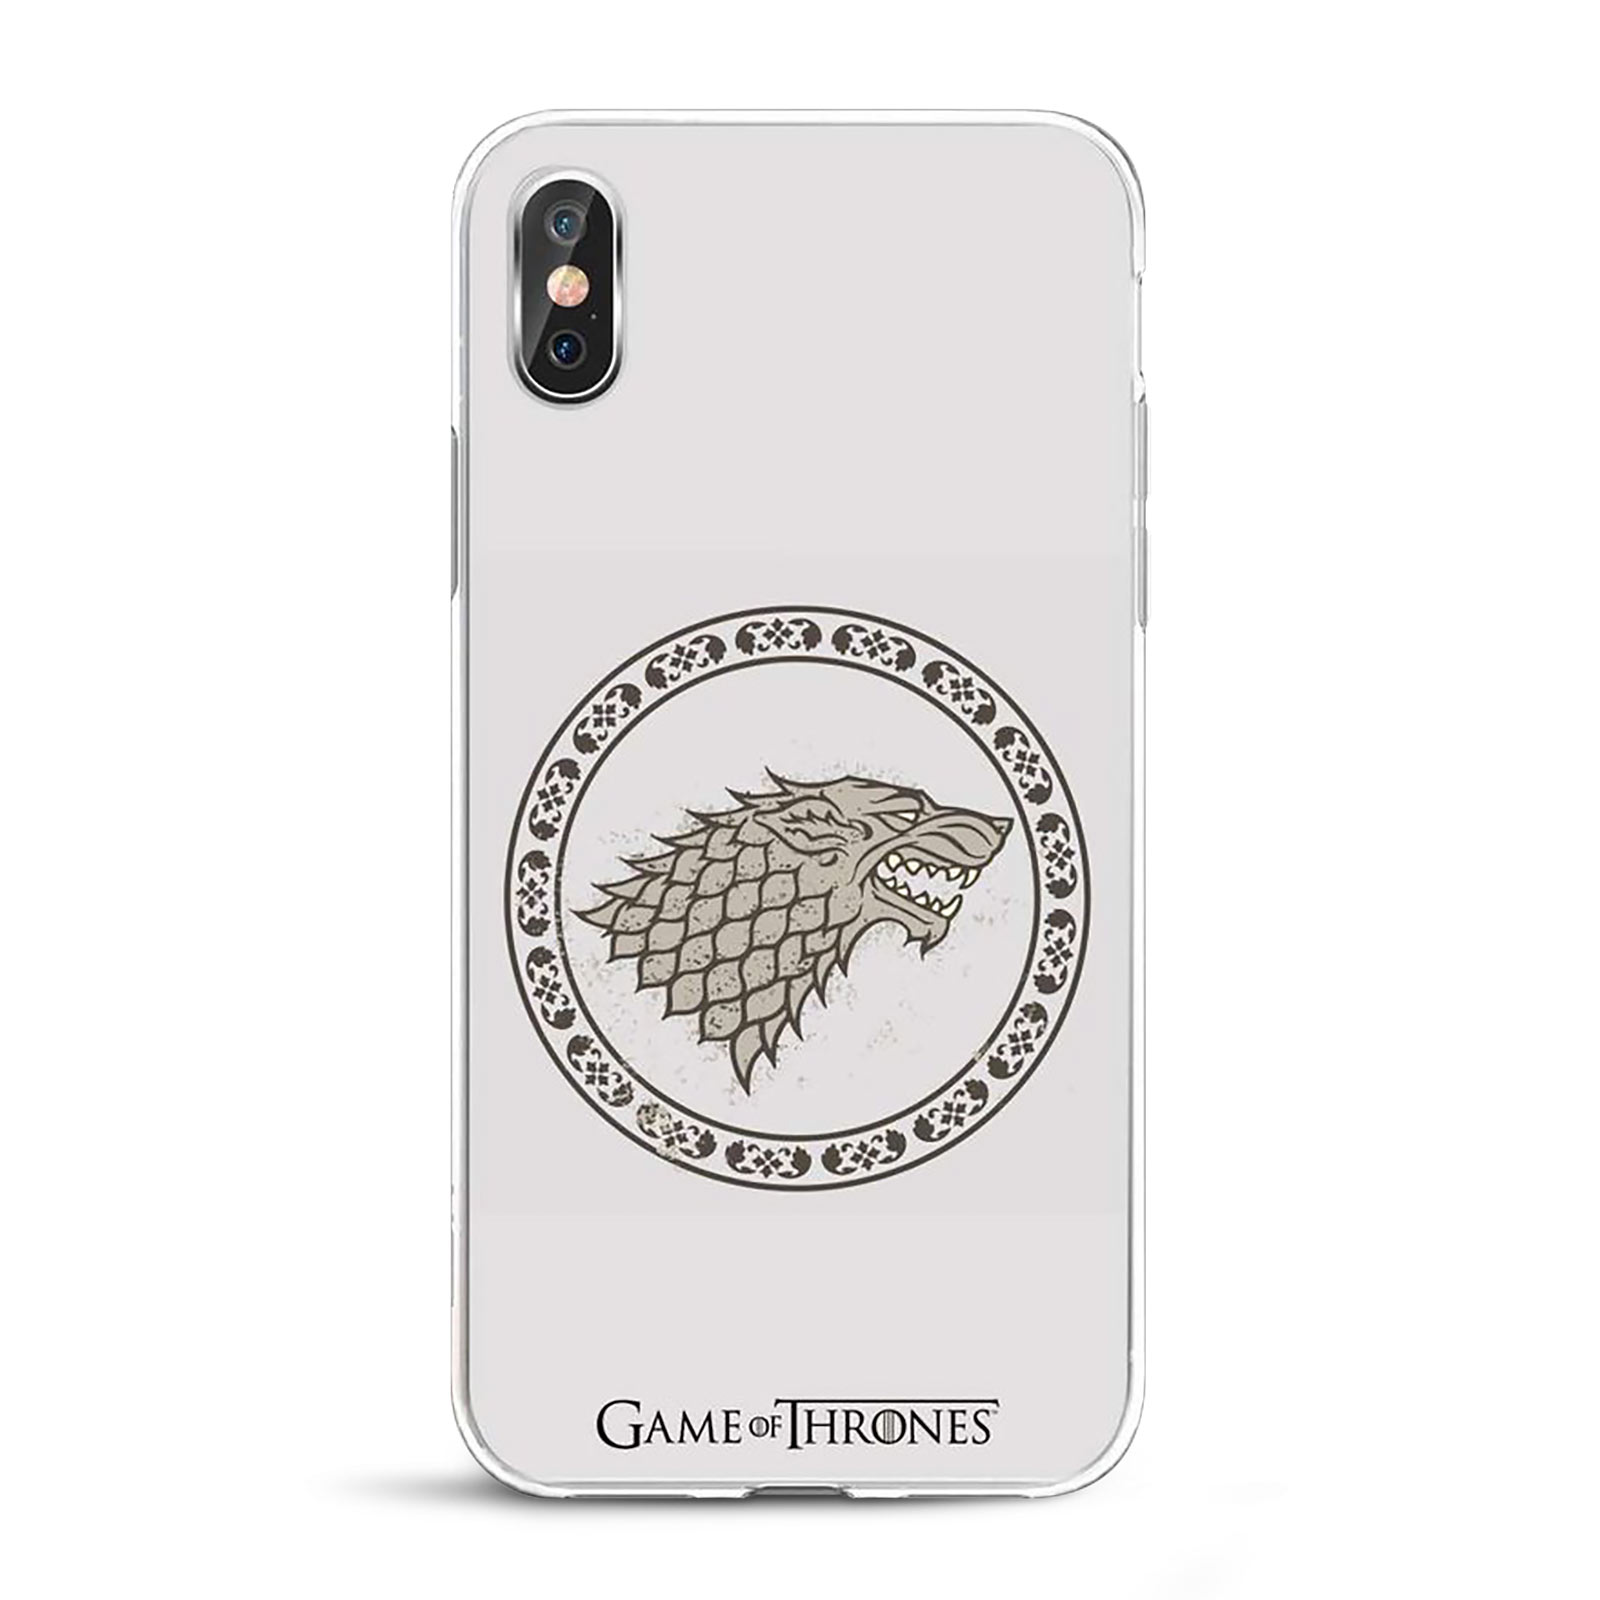 Game of Thrones - Coque iPhone X / XS en silicone blanc avec blason Stark